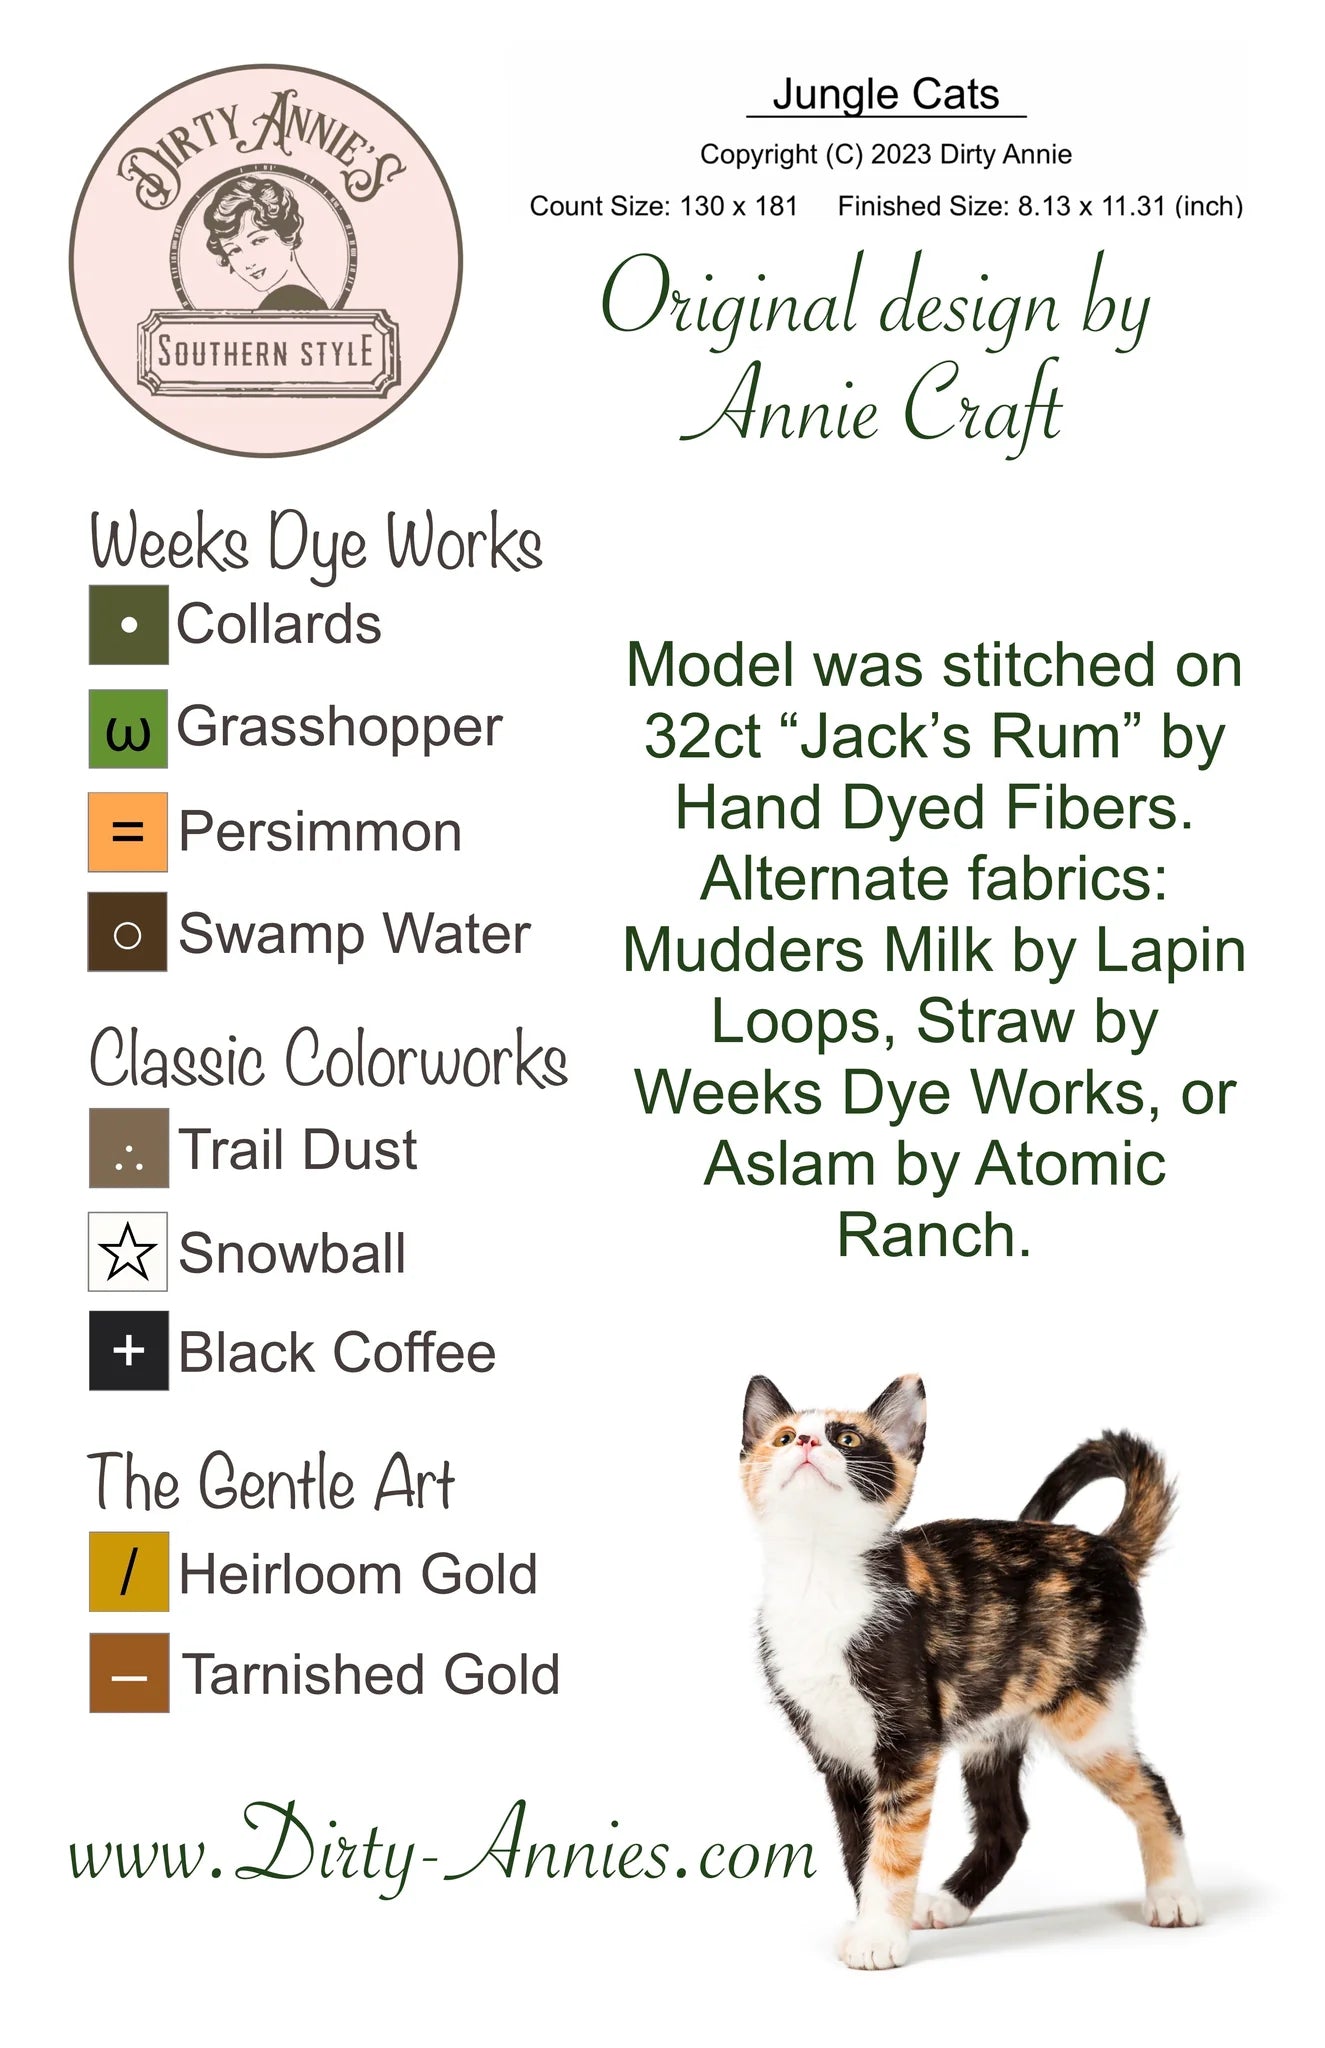 Jungle Cats - Dirty Annie's - Cross Stitch Pattern, Needlecraft Patterns, Needlecraft Patterns, The Crafty Grimalkin - A Cross Stitch Store